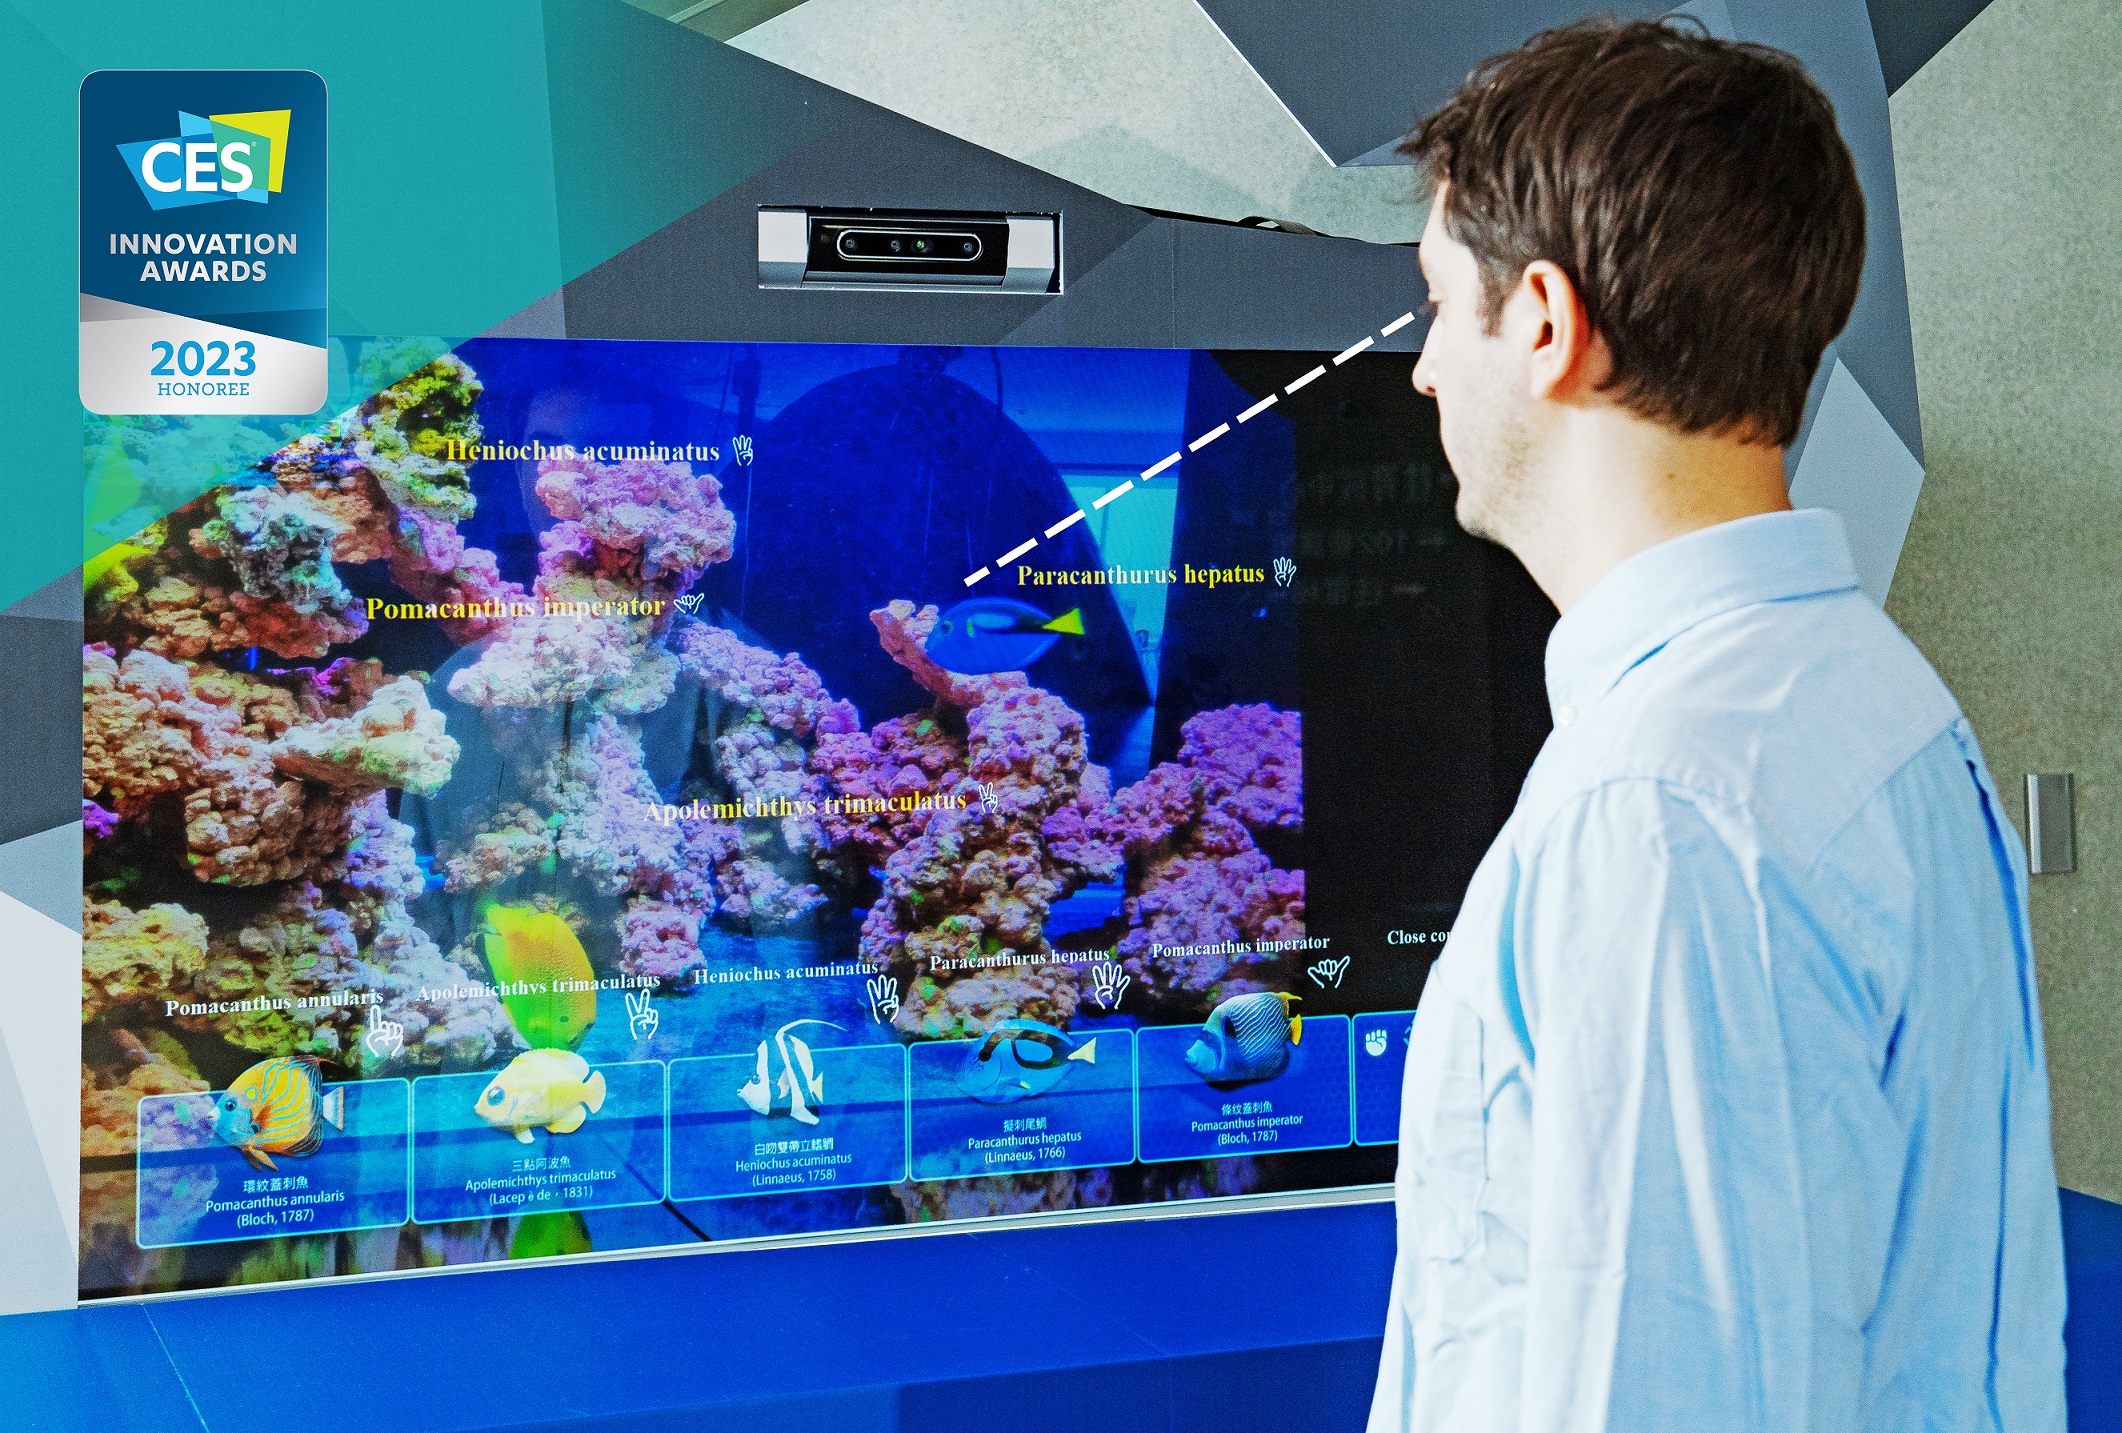 AI Aquarium enables gaze tracking and interactive information display of marine life information.